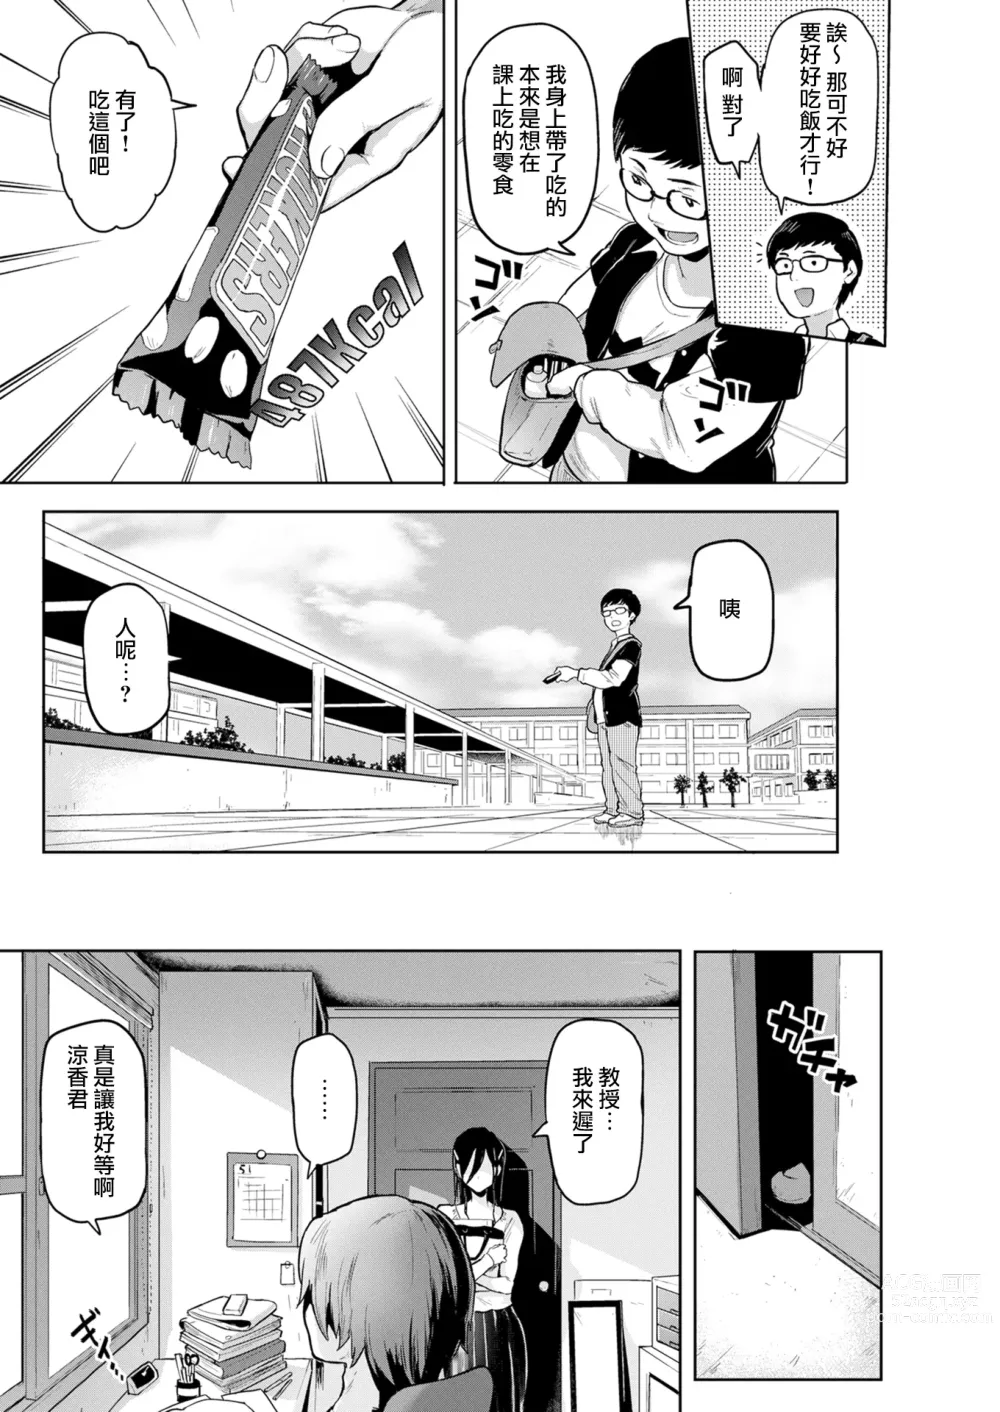 Page 9 of doujinshi ソメラレハラスメント